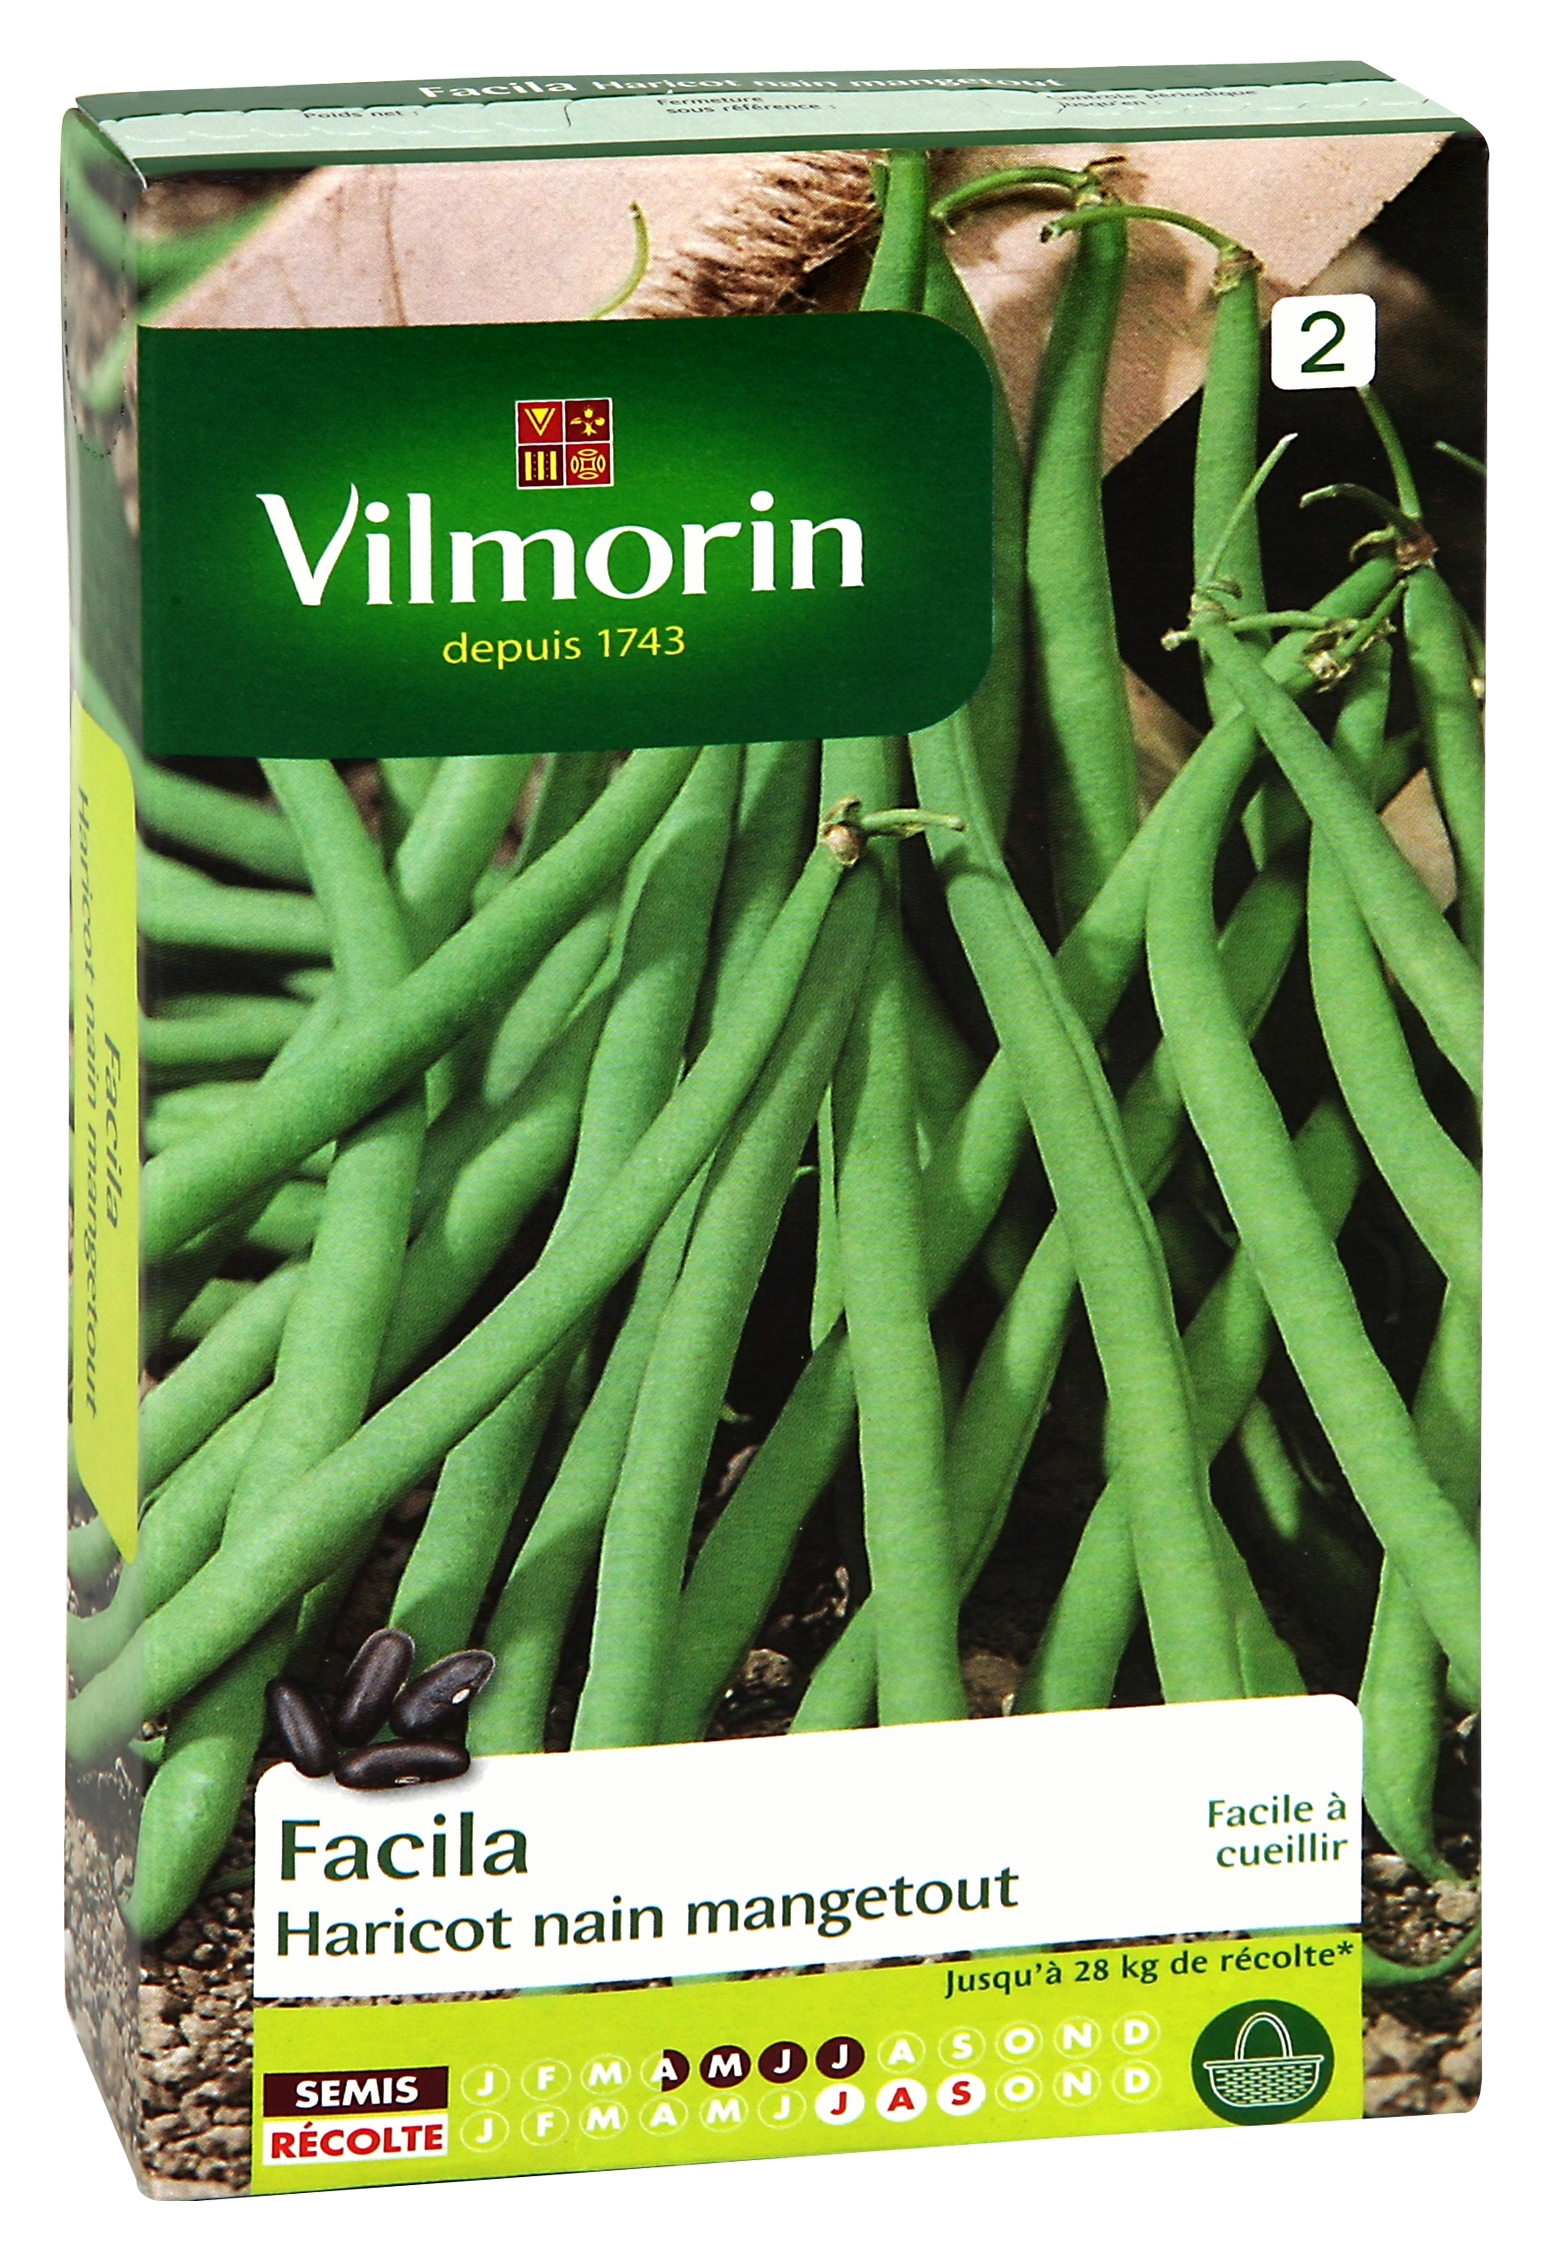 Haricot nain mangetout Facila (facile à cueillir) - Vilmorin